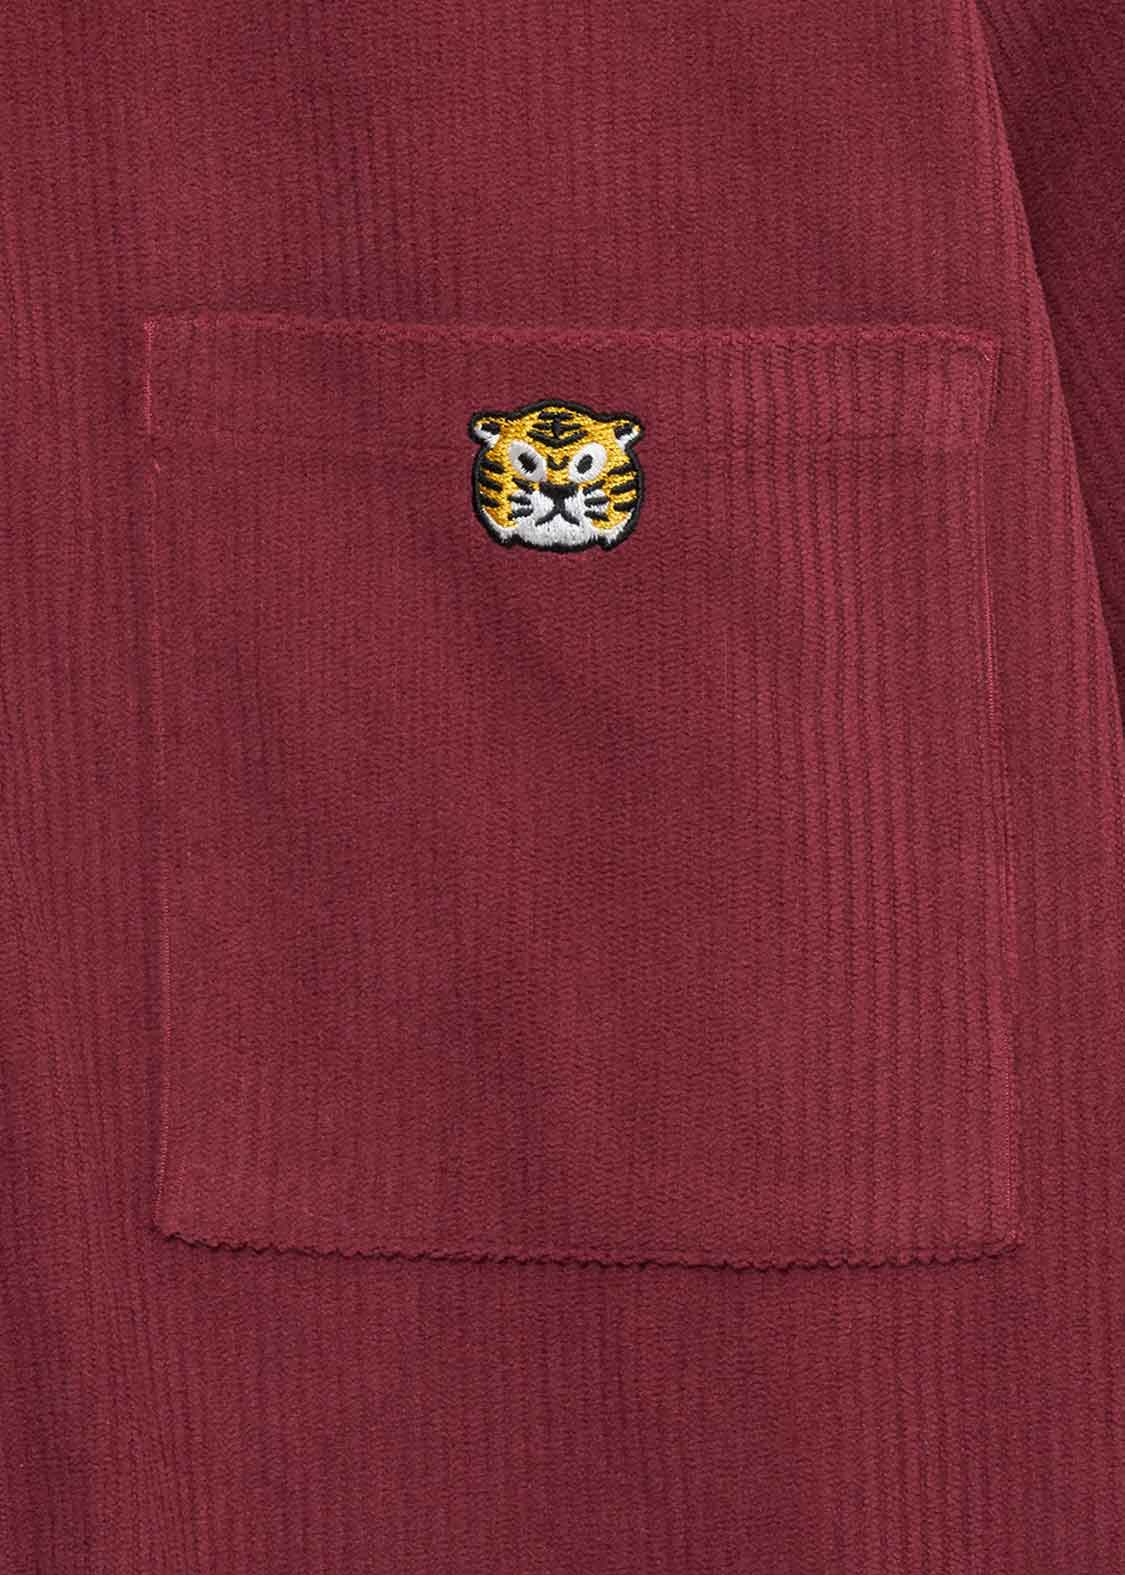 Corduroy Long Sleeve Shirt (Awesome Tiger)